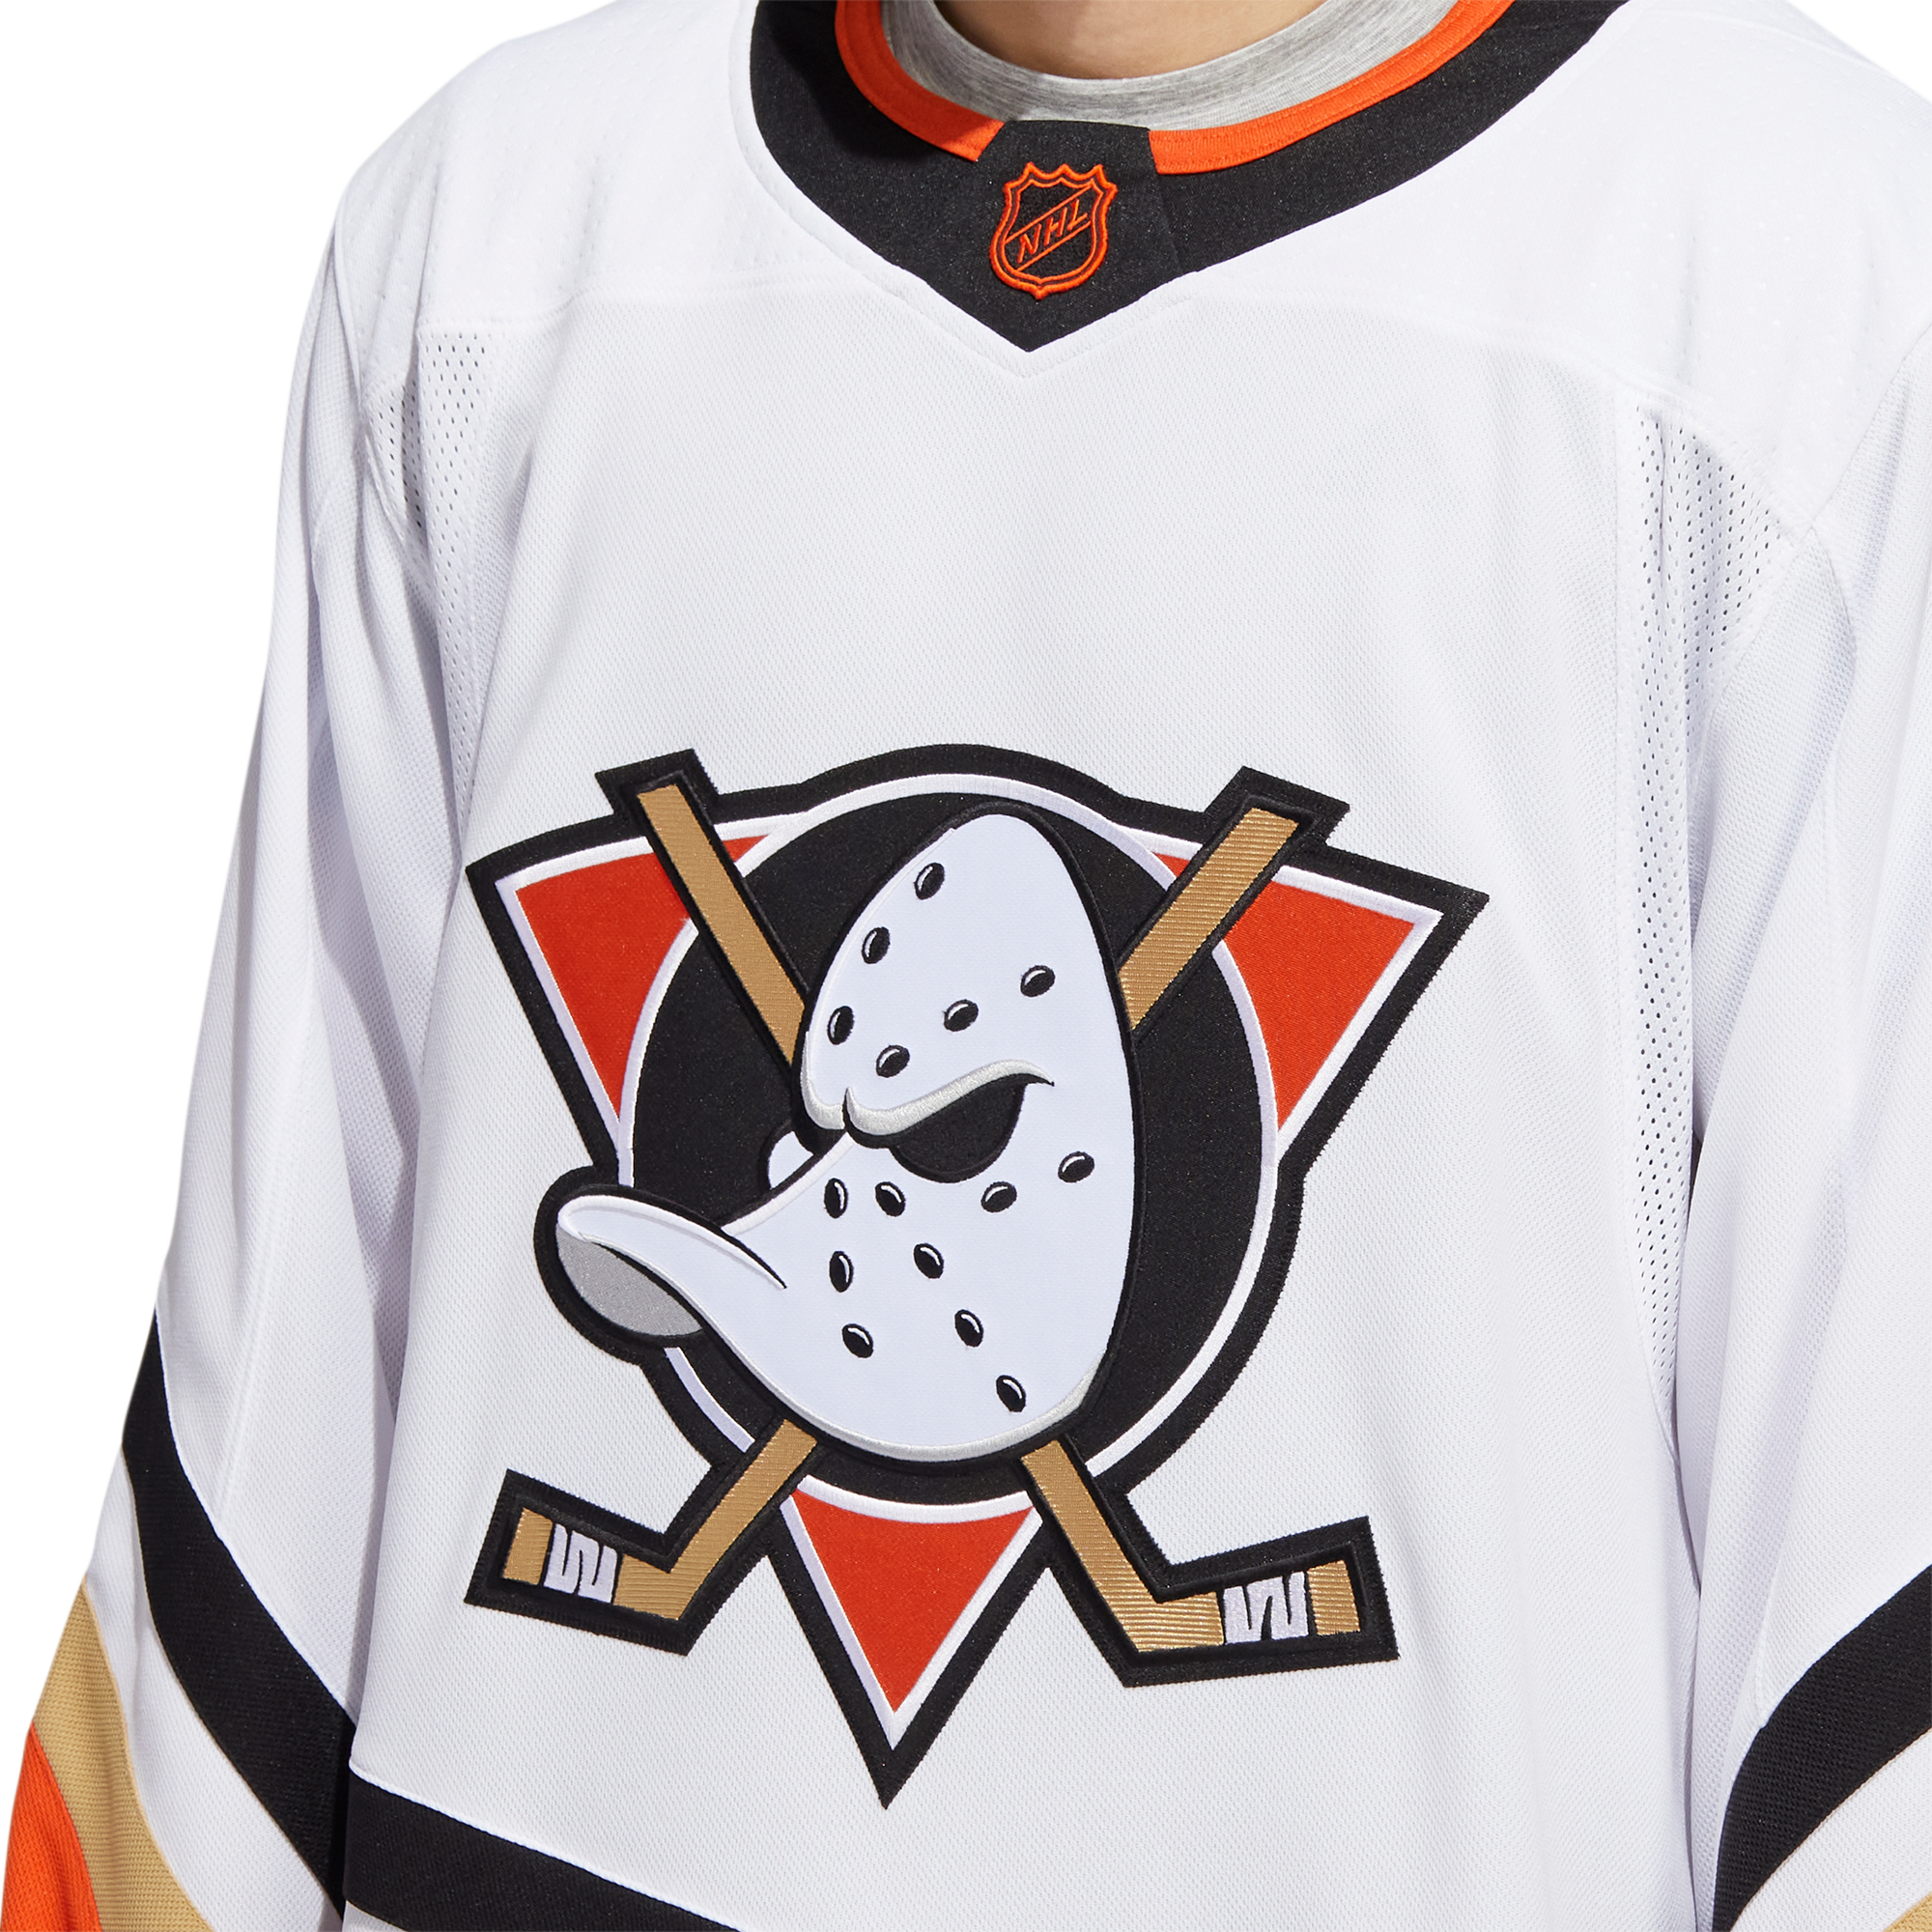 Men's Fanatics Branded White Anaheim Ducks Special Edition 2.0 Breakaway Blank Jersey(XL)